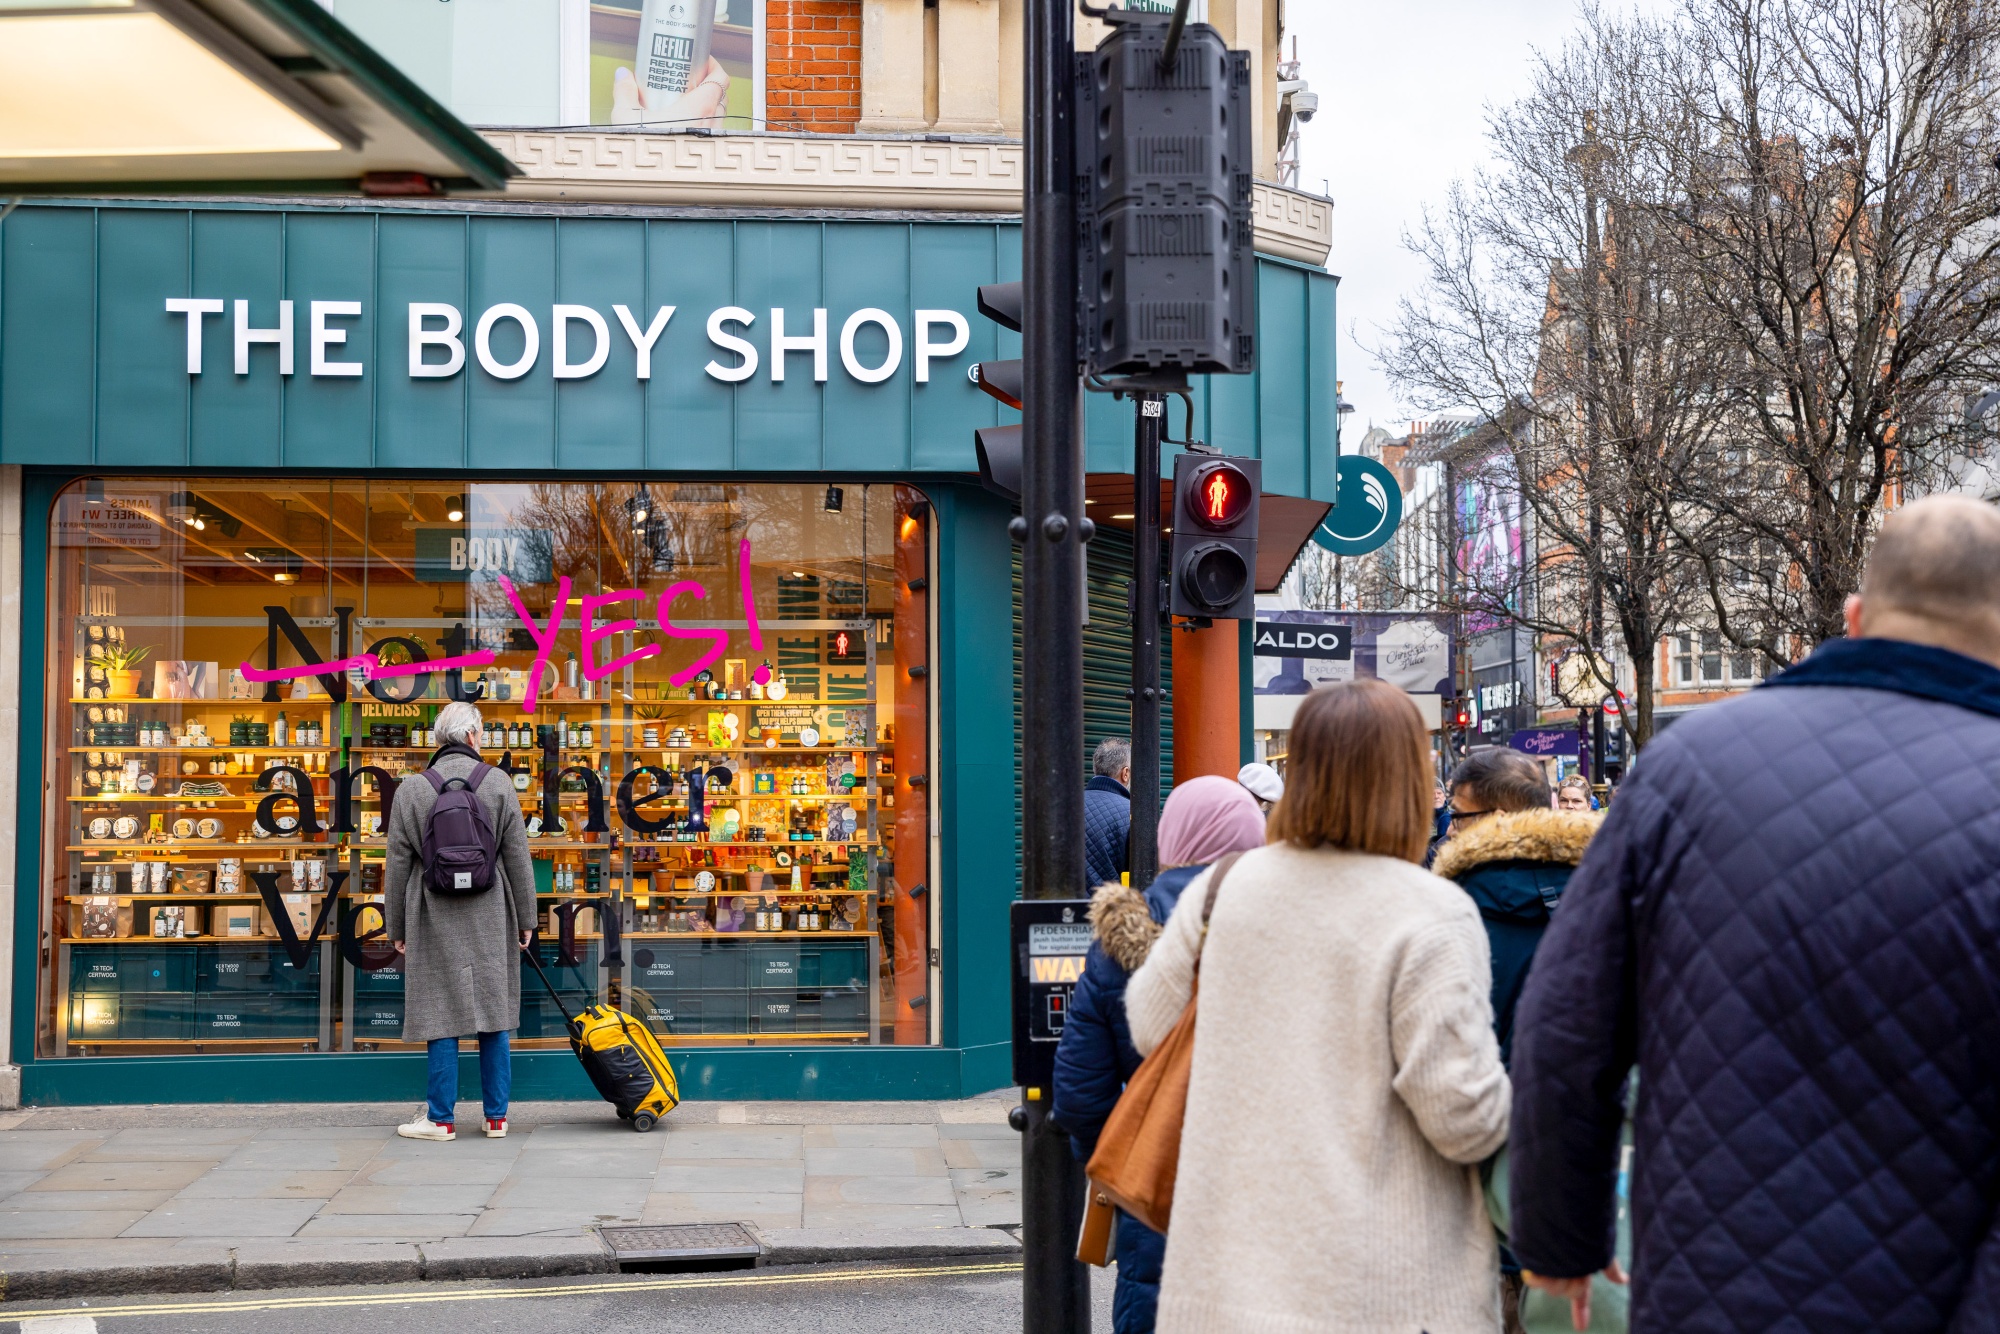 HMV Owner Considers Rescue Bid for The Body Shop: Telegraph